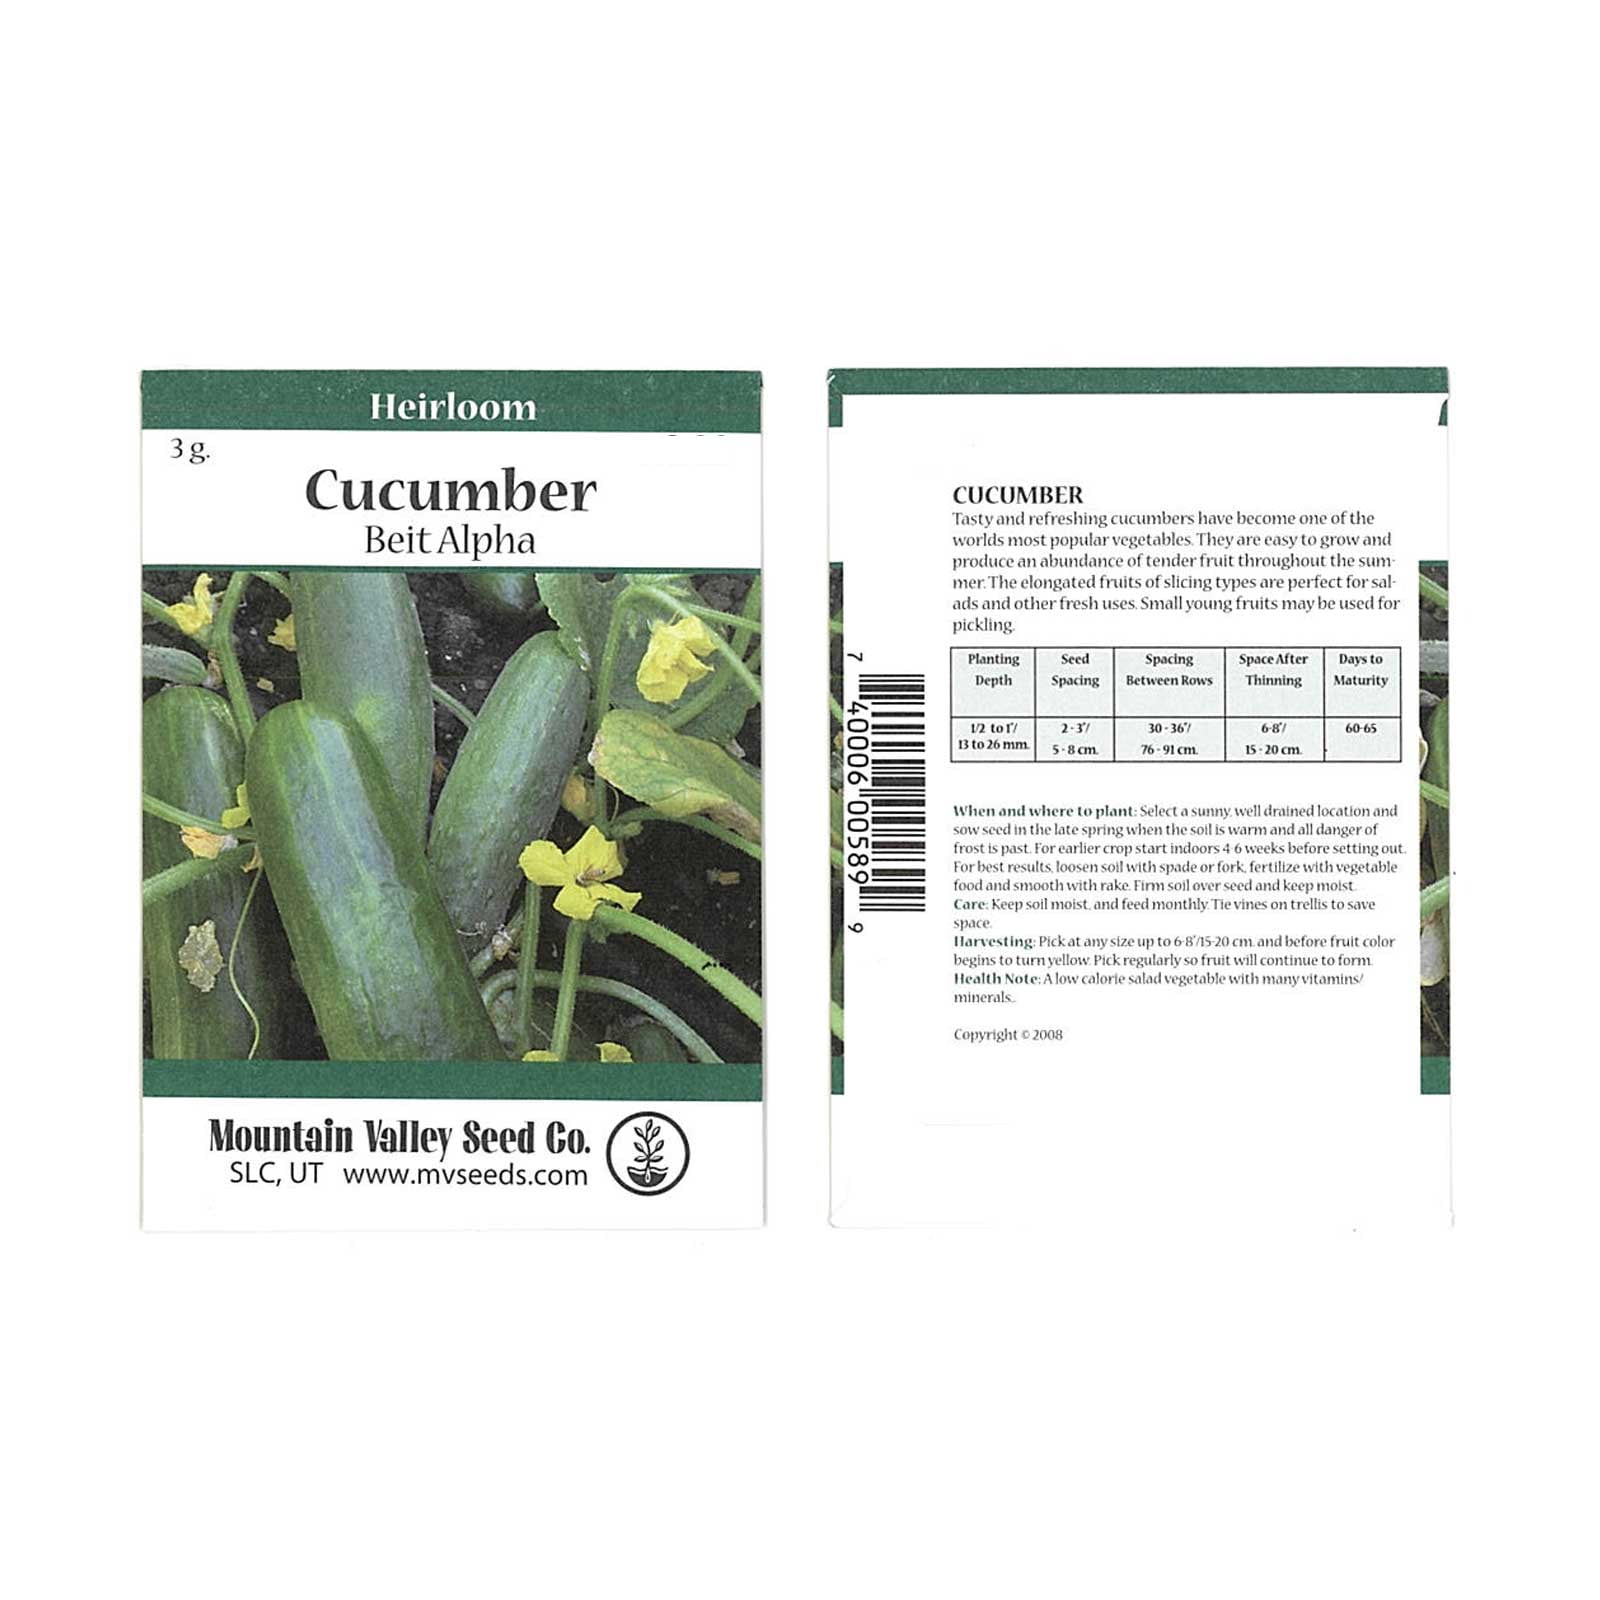 Cucumber Hasbulat F1 Hybrid NON GMO Vegetable Seeds